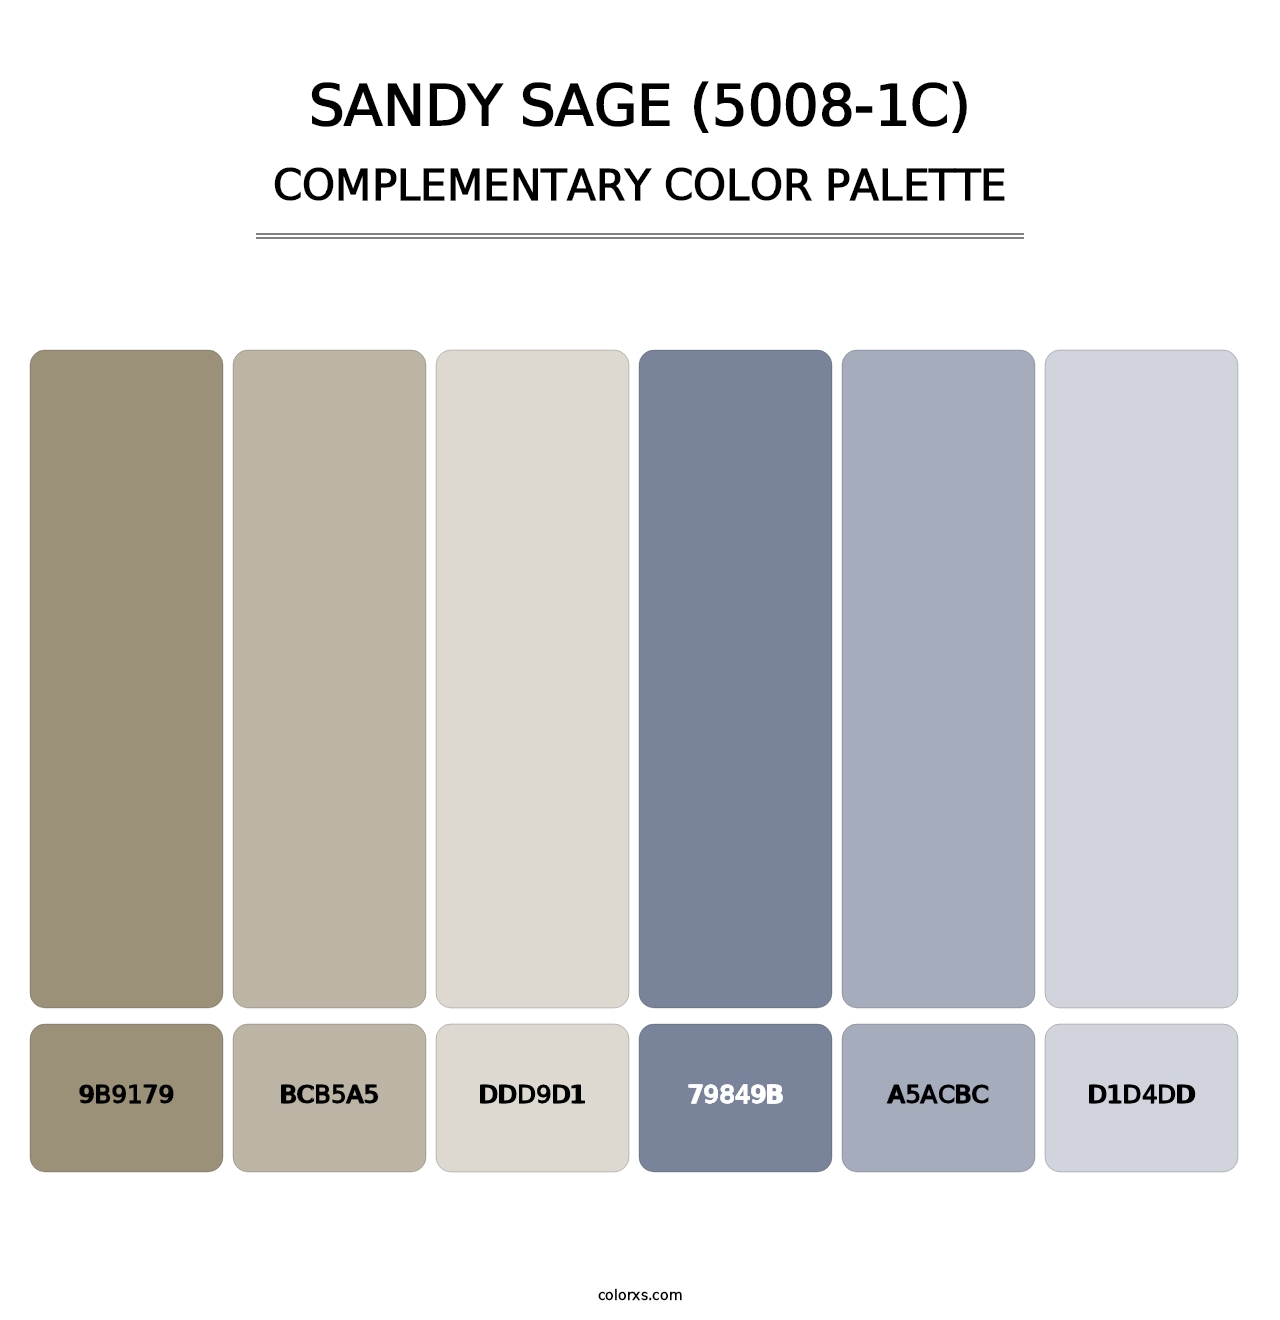 Sandy Sage (5008-1C) - Complementary Color Palette